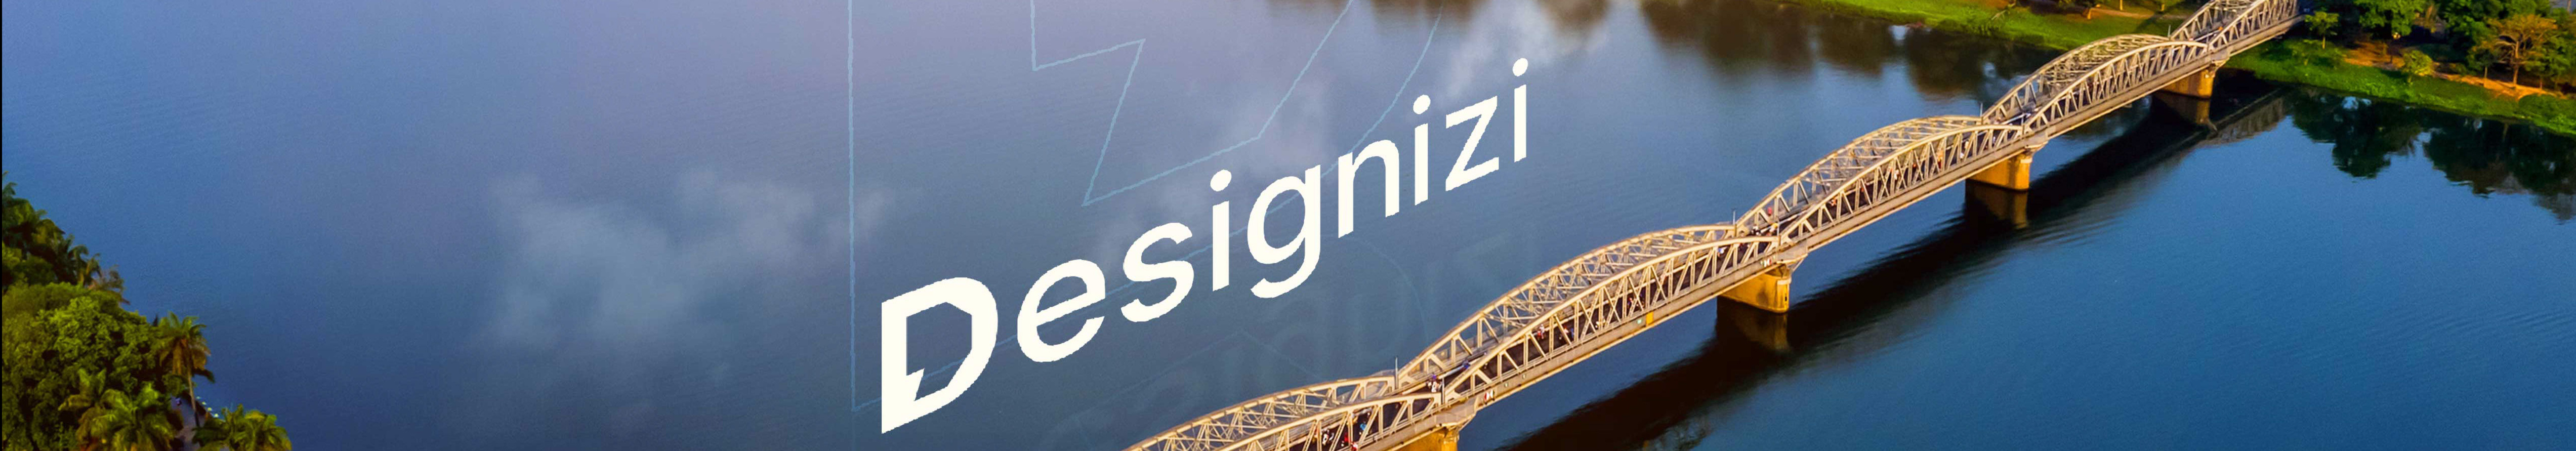 DesigniZi Creative Agency のプロファイルバナー